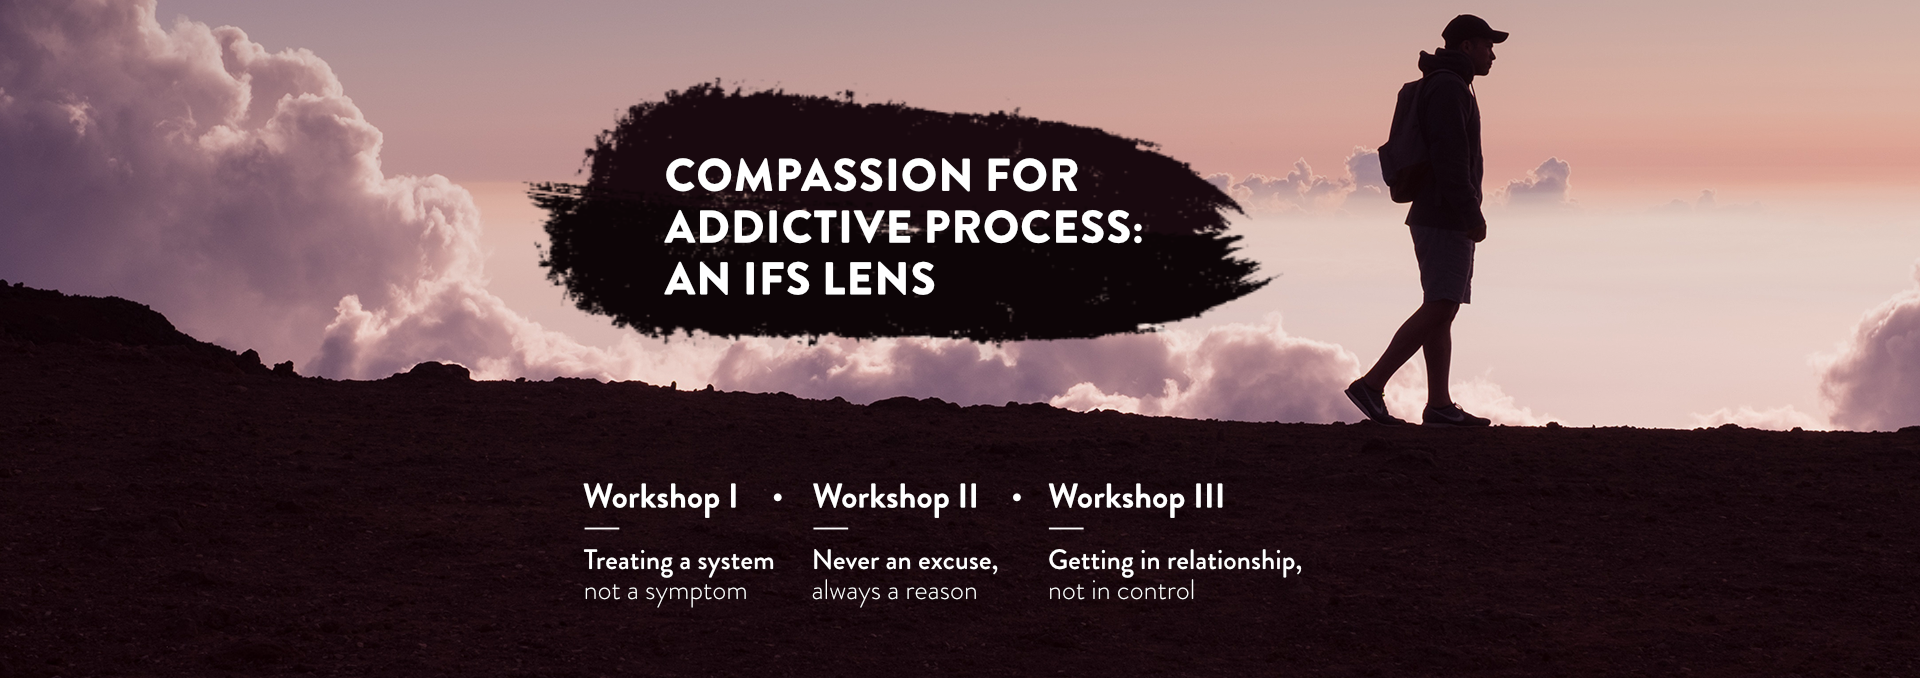 Compassion for Addictive Process: An IFS Lens - LP 2